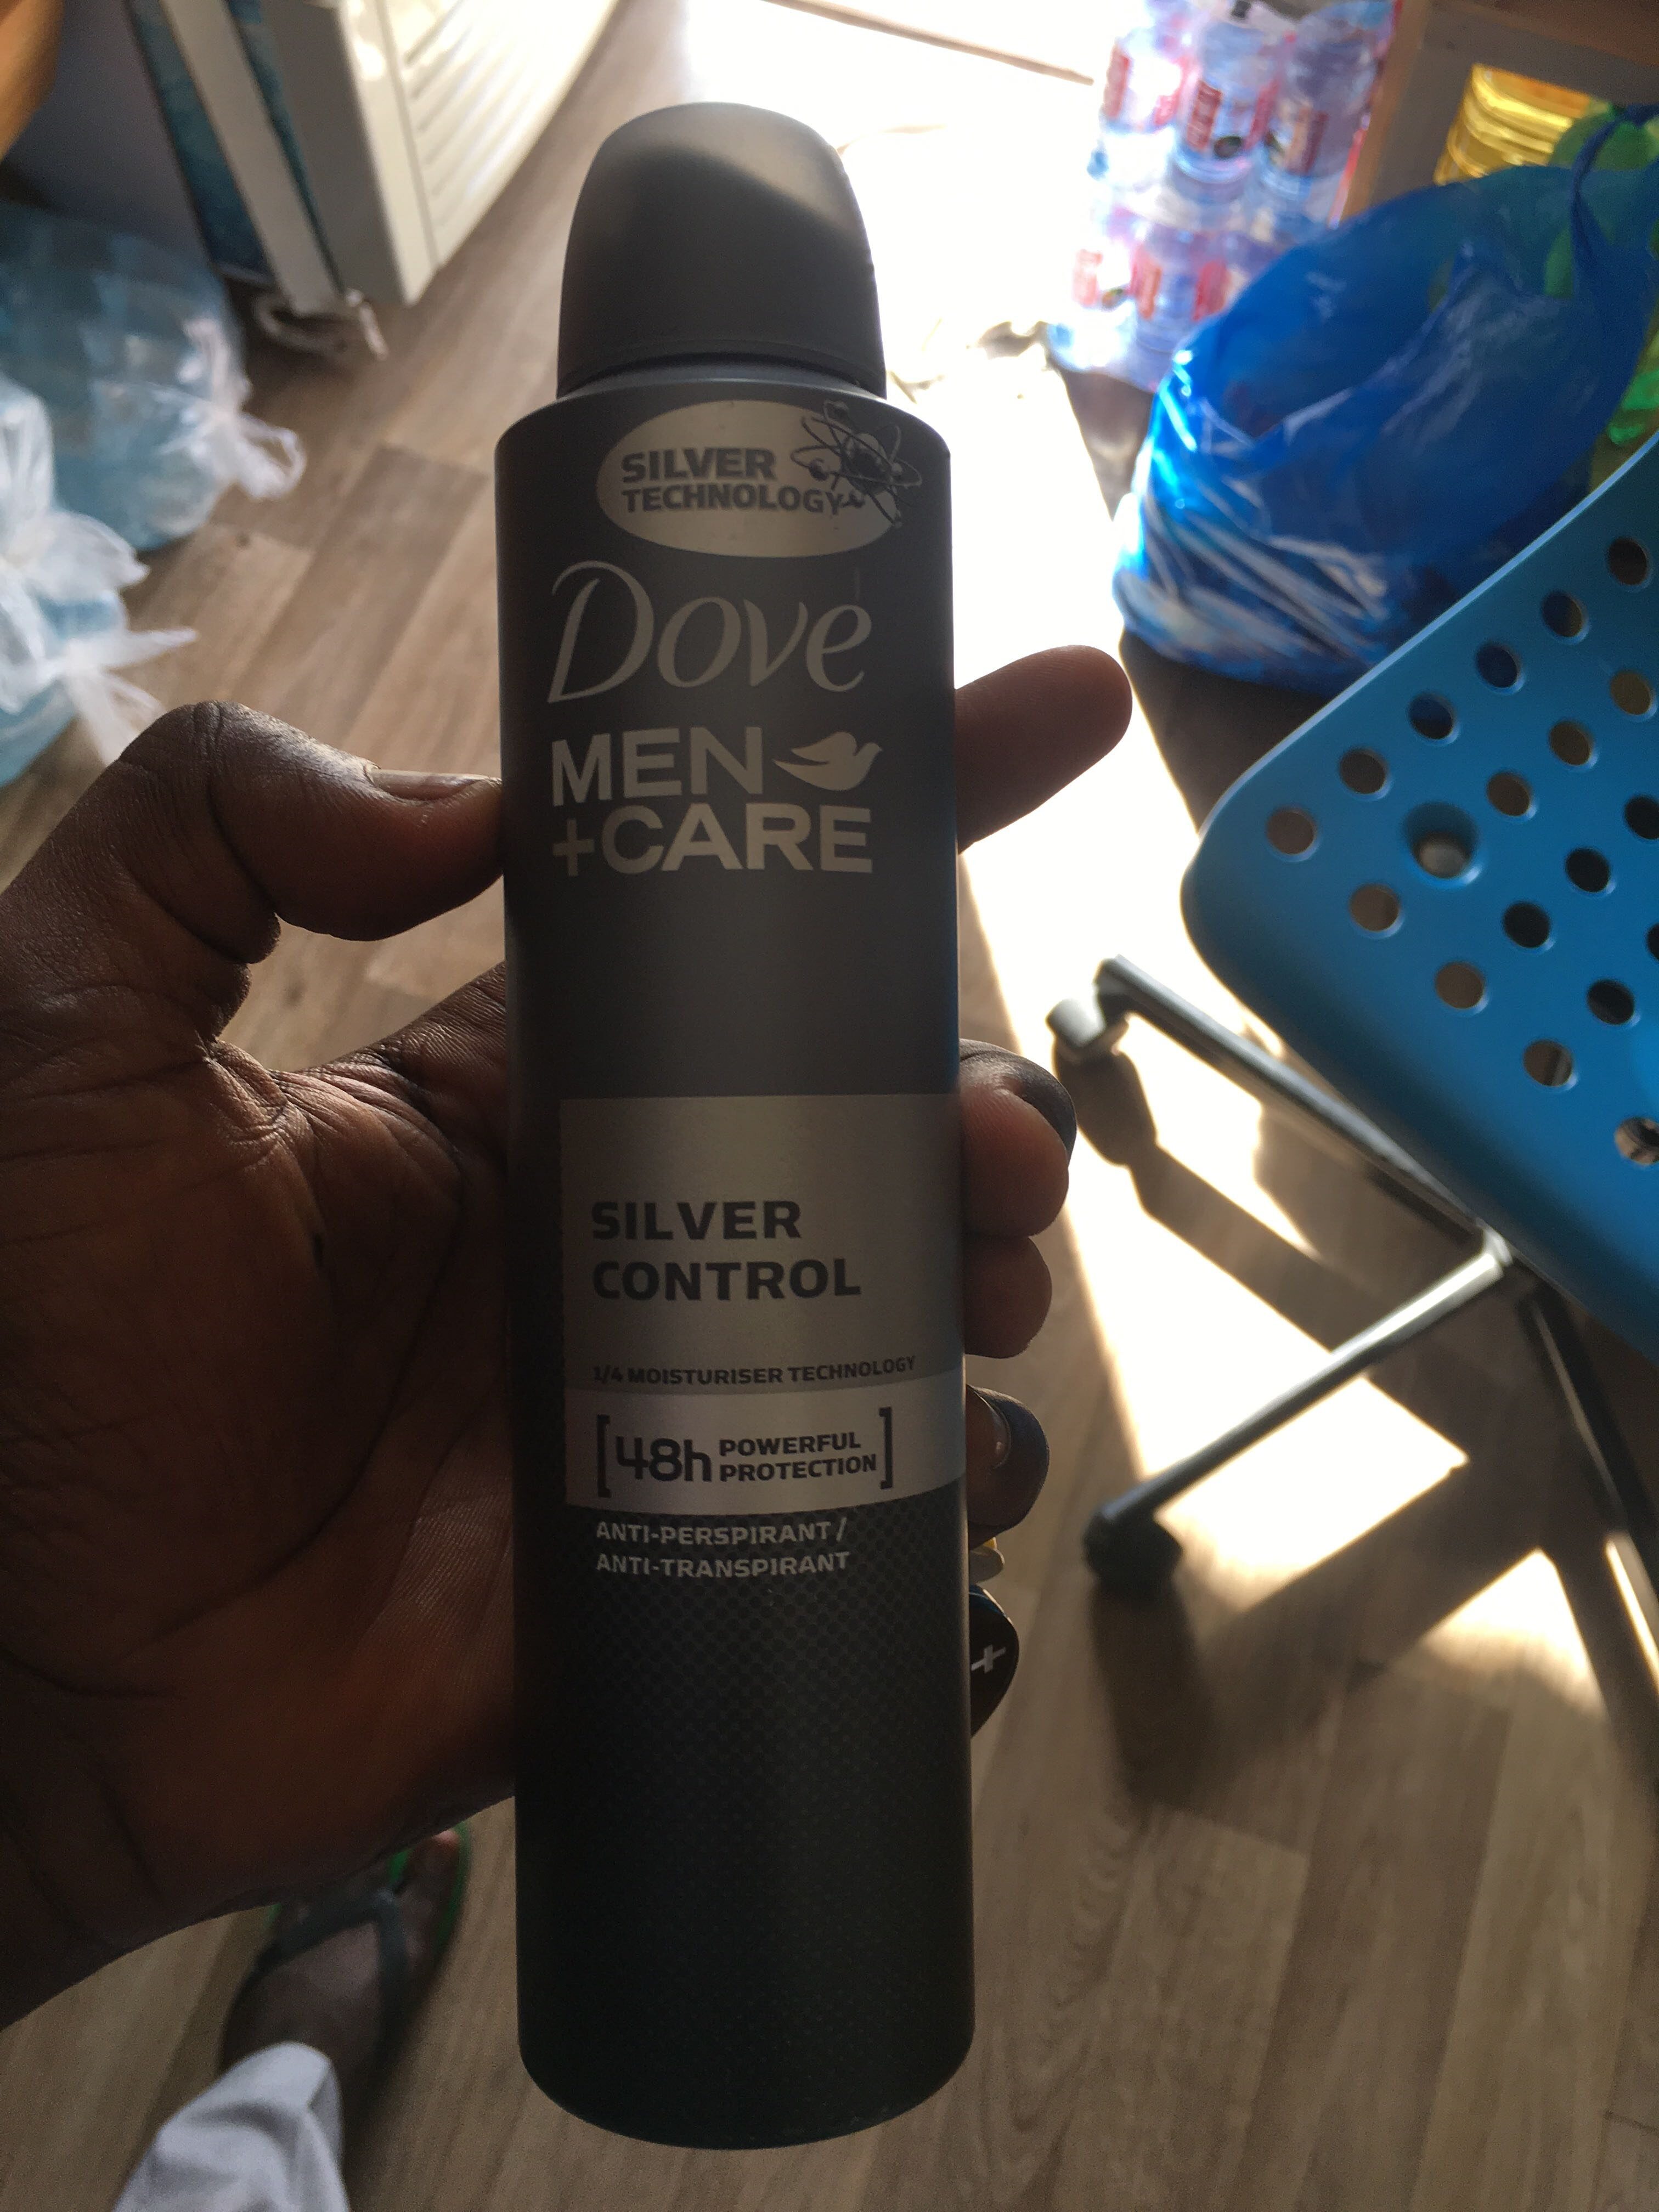 Dove men care - Product - fr